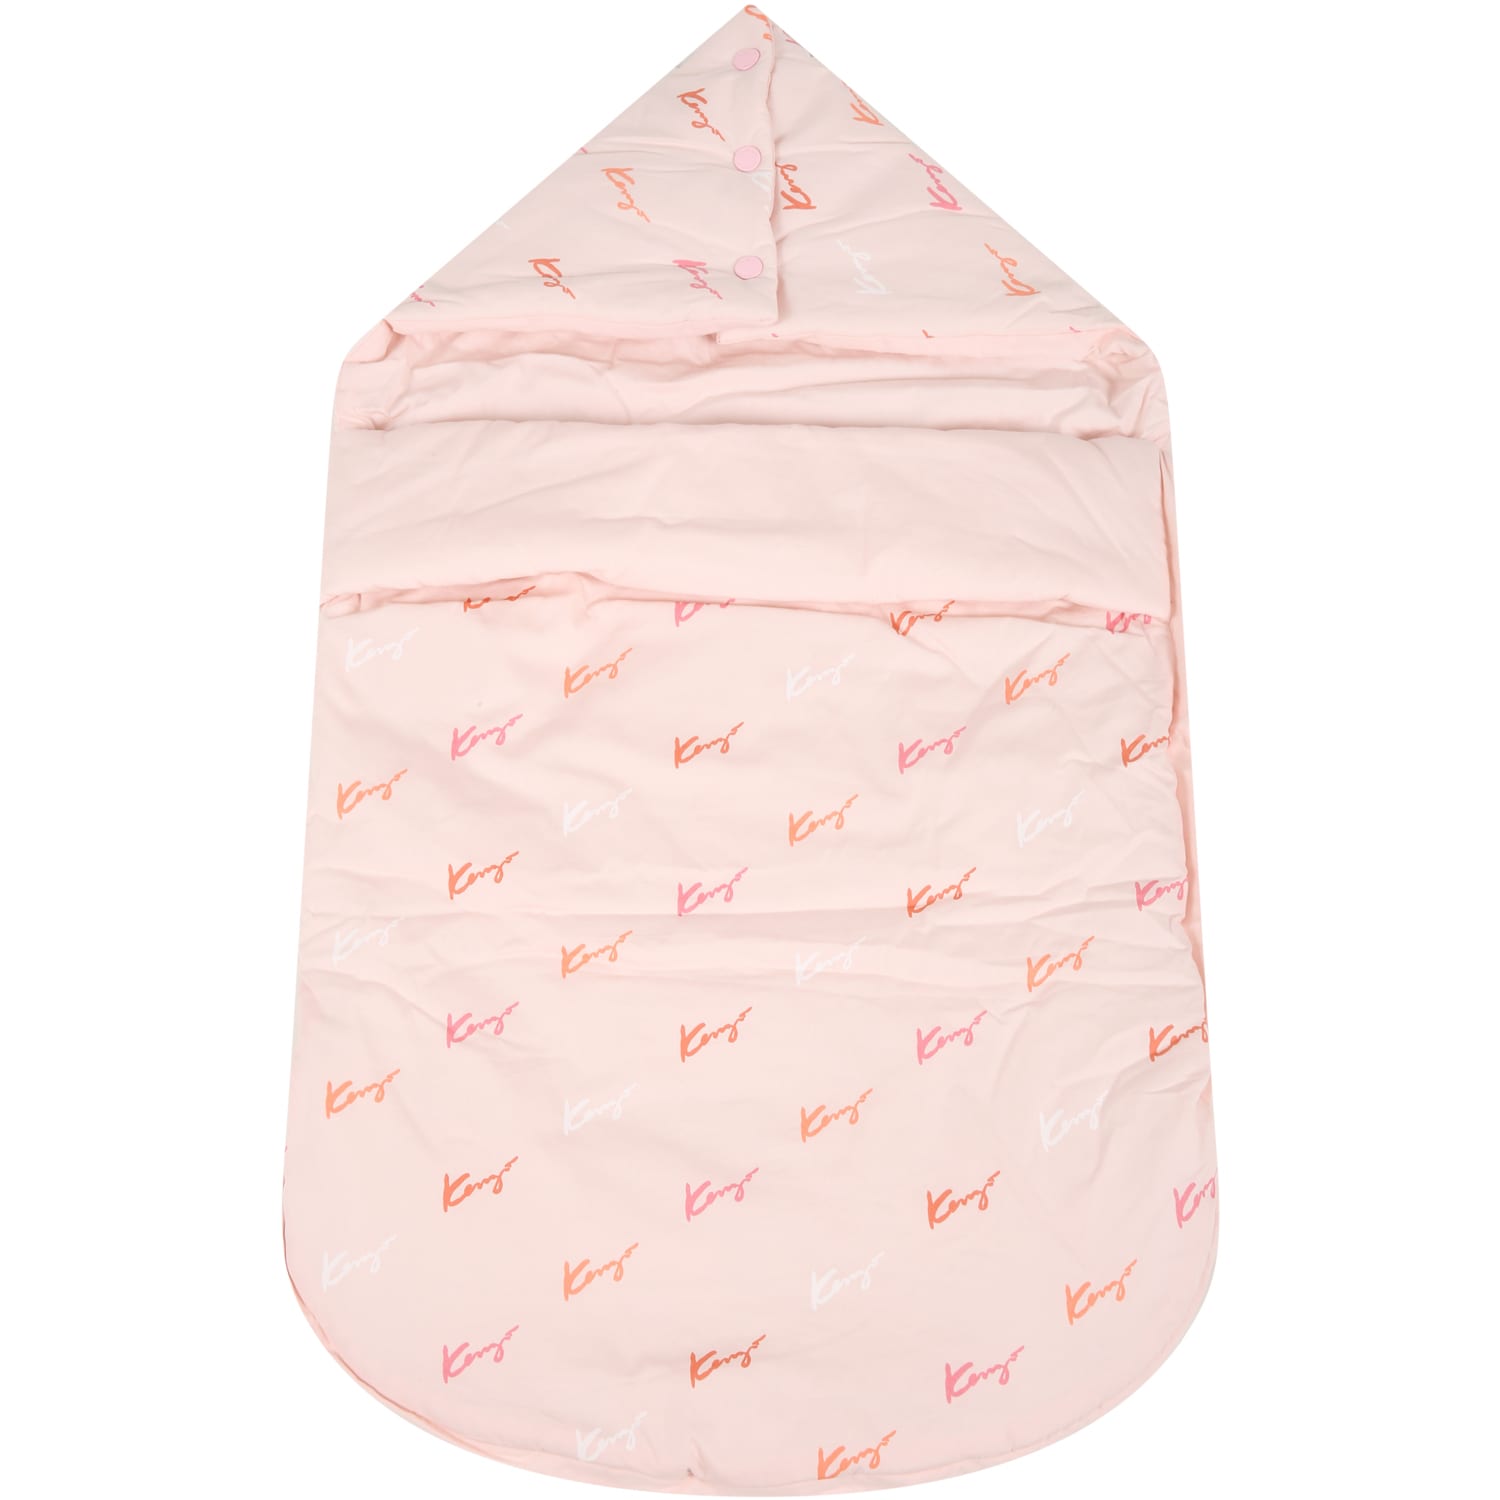 Kenzo Kids Pink Sleeping Bag For Baby Girl With Logos